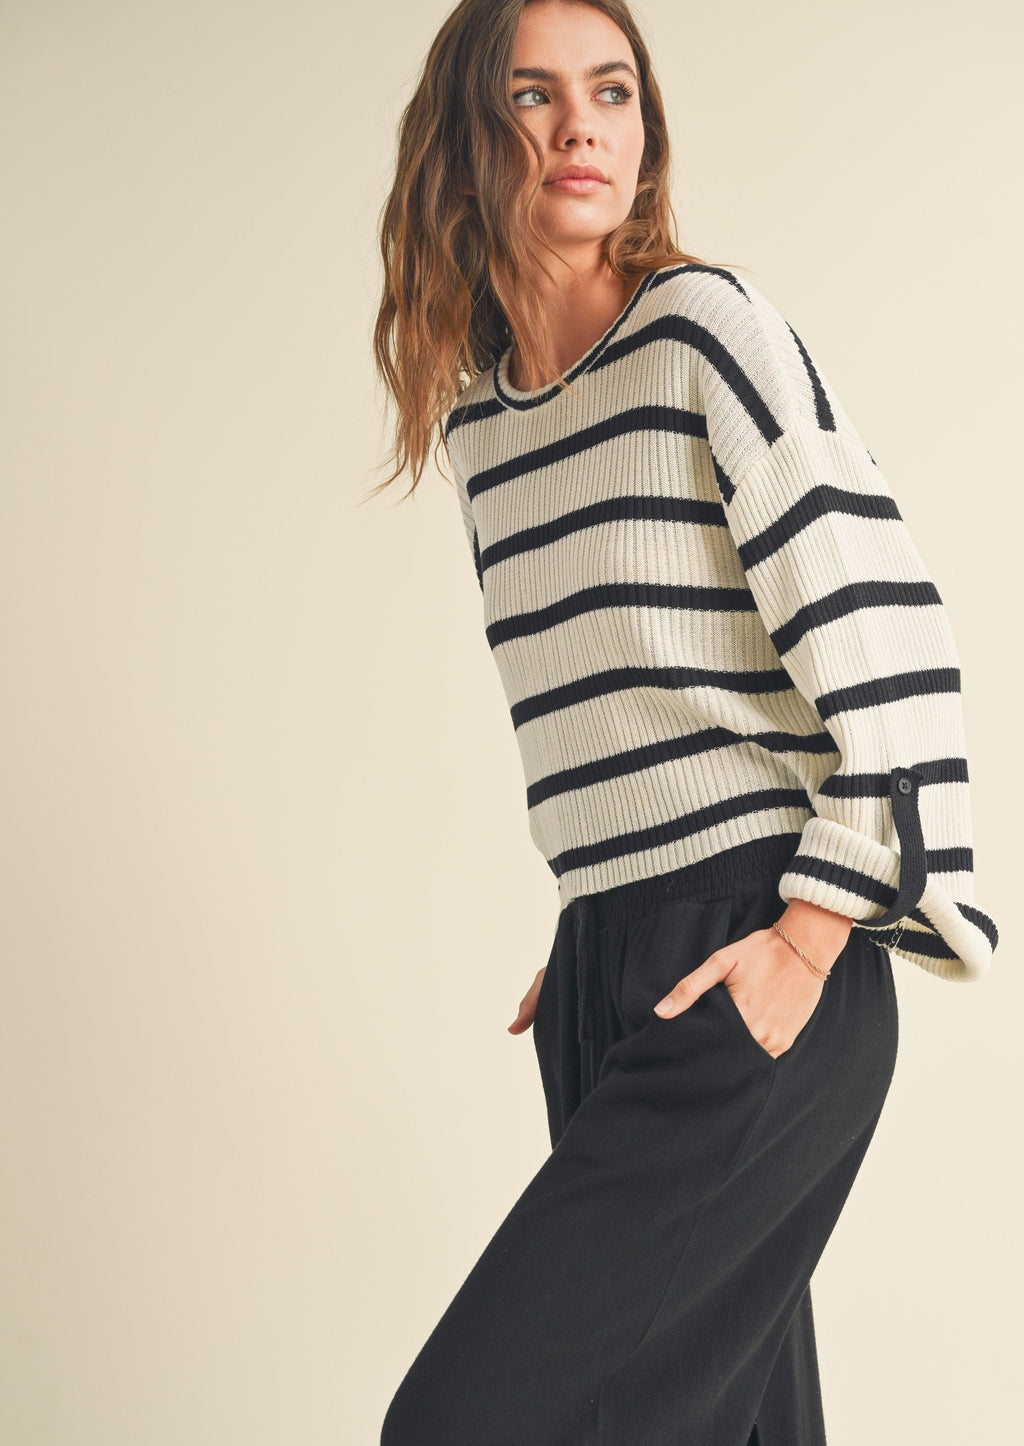 Striped Knit Pullover, White Black